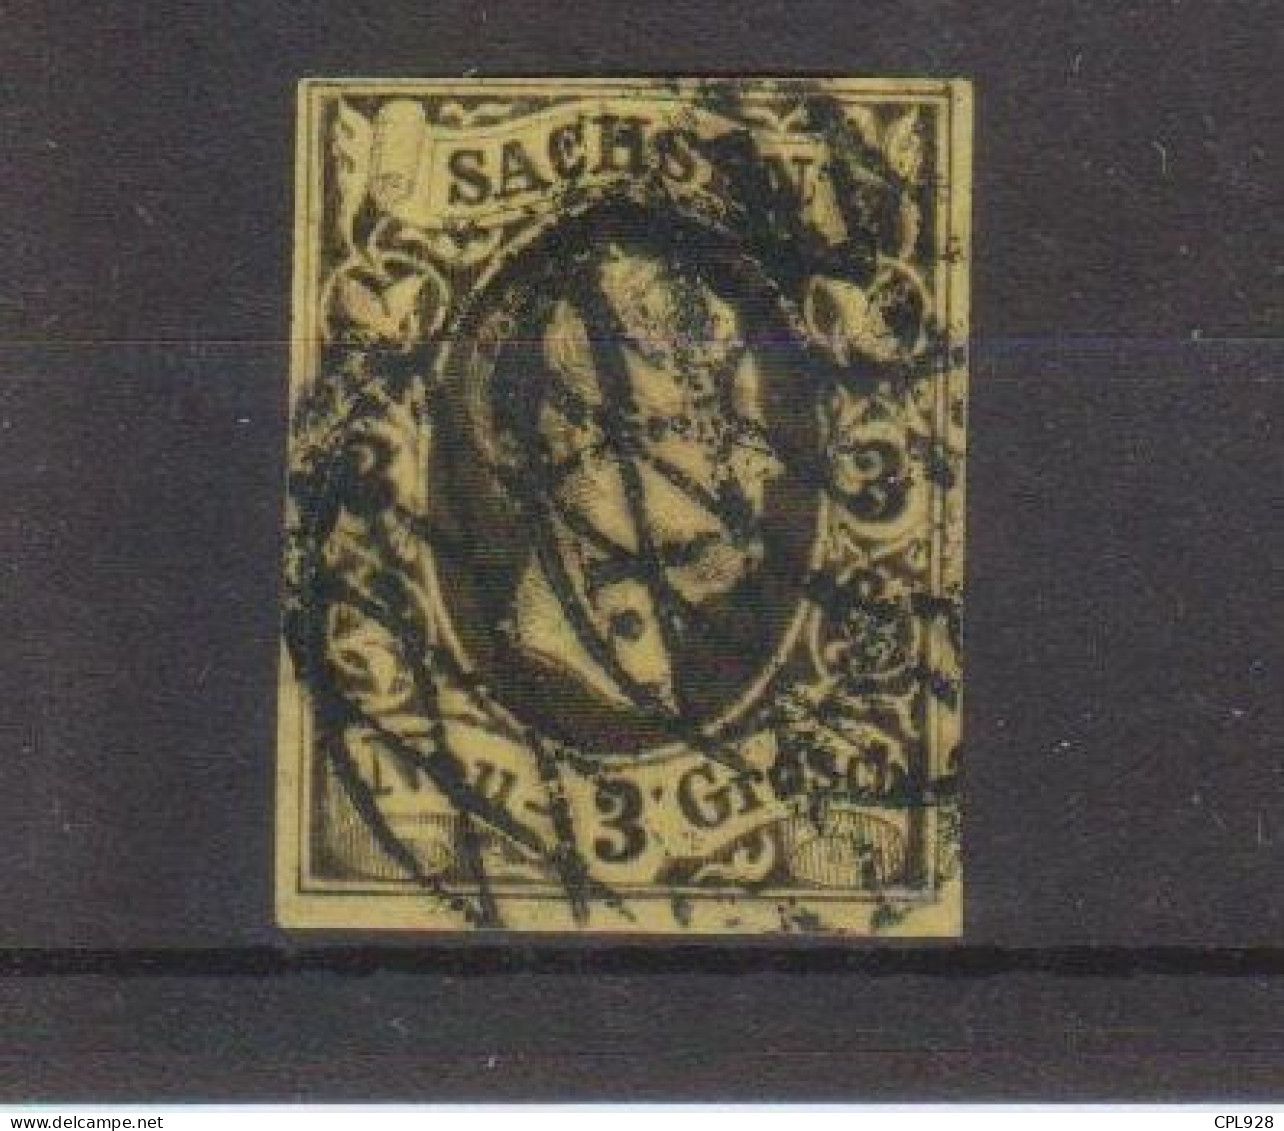 Saxe N°5 - Sachsen